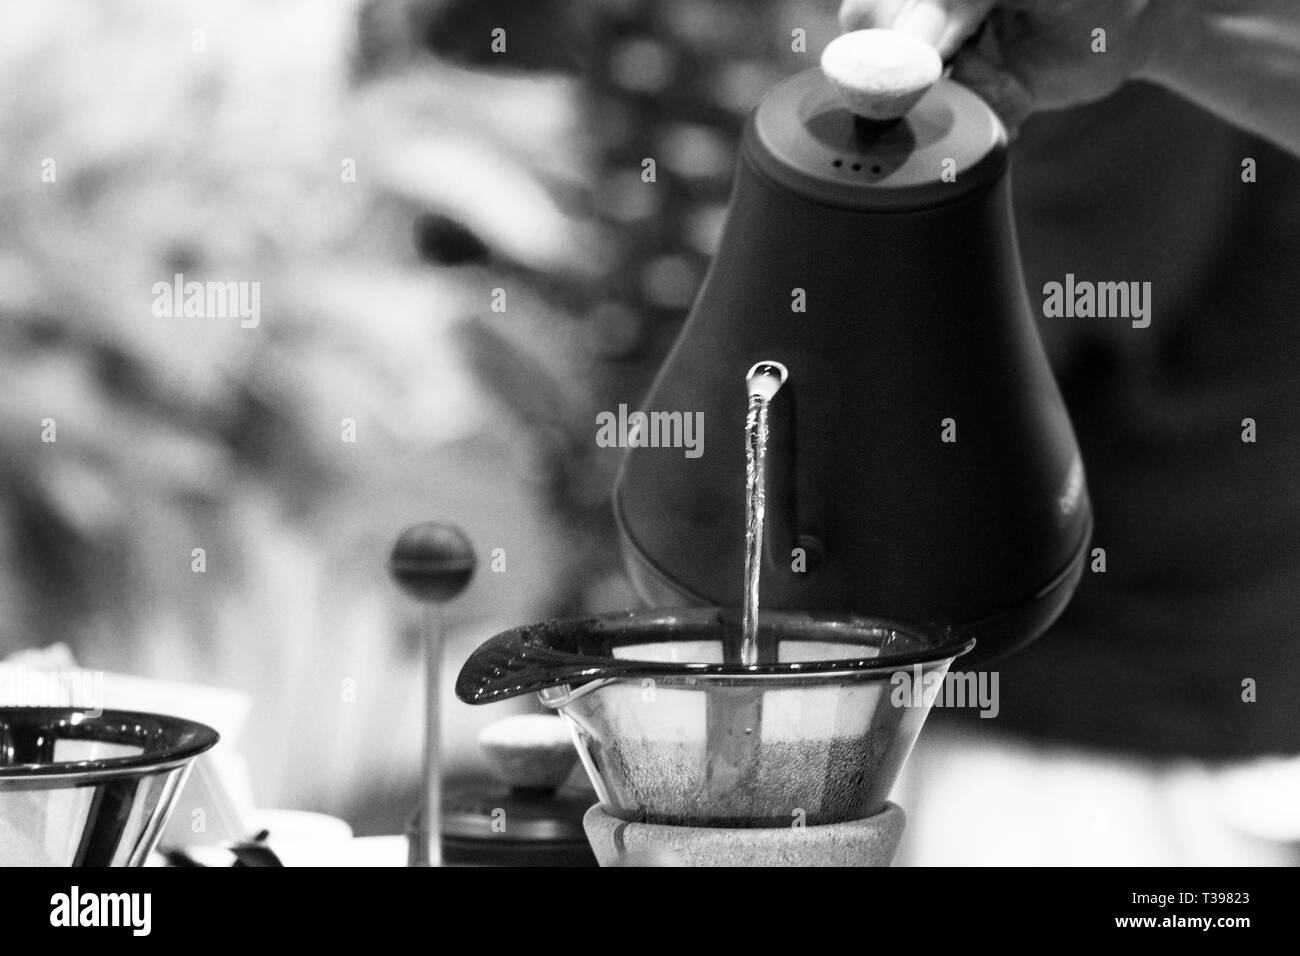 Barista is making coffee, coffee preparing with chemex, Chemex Dripping hot fresh coffee Stock Photo